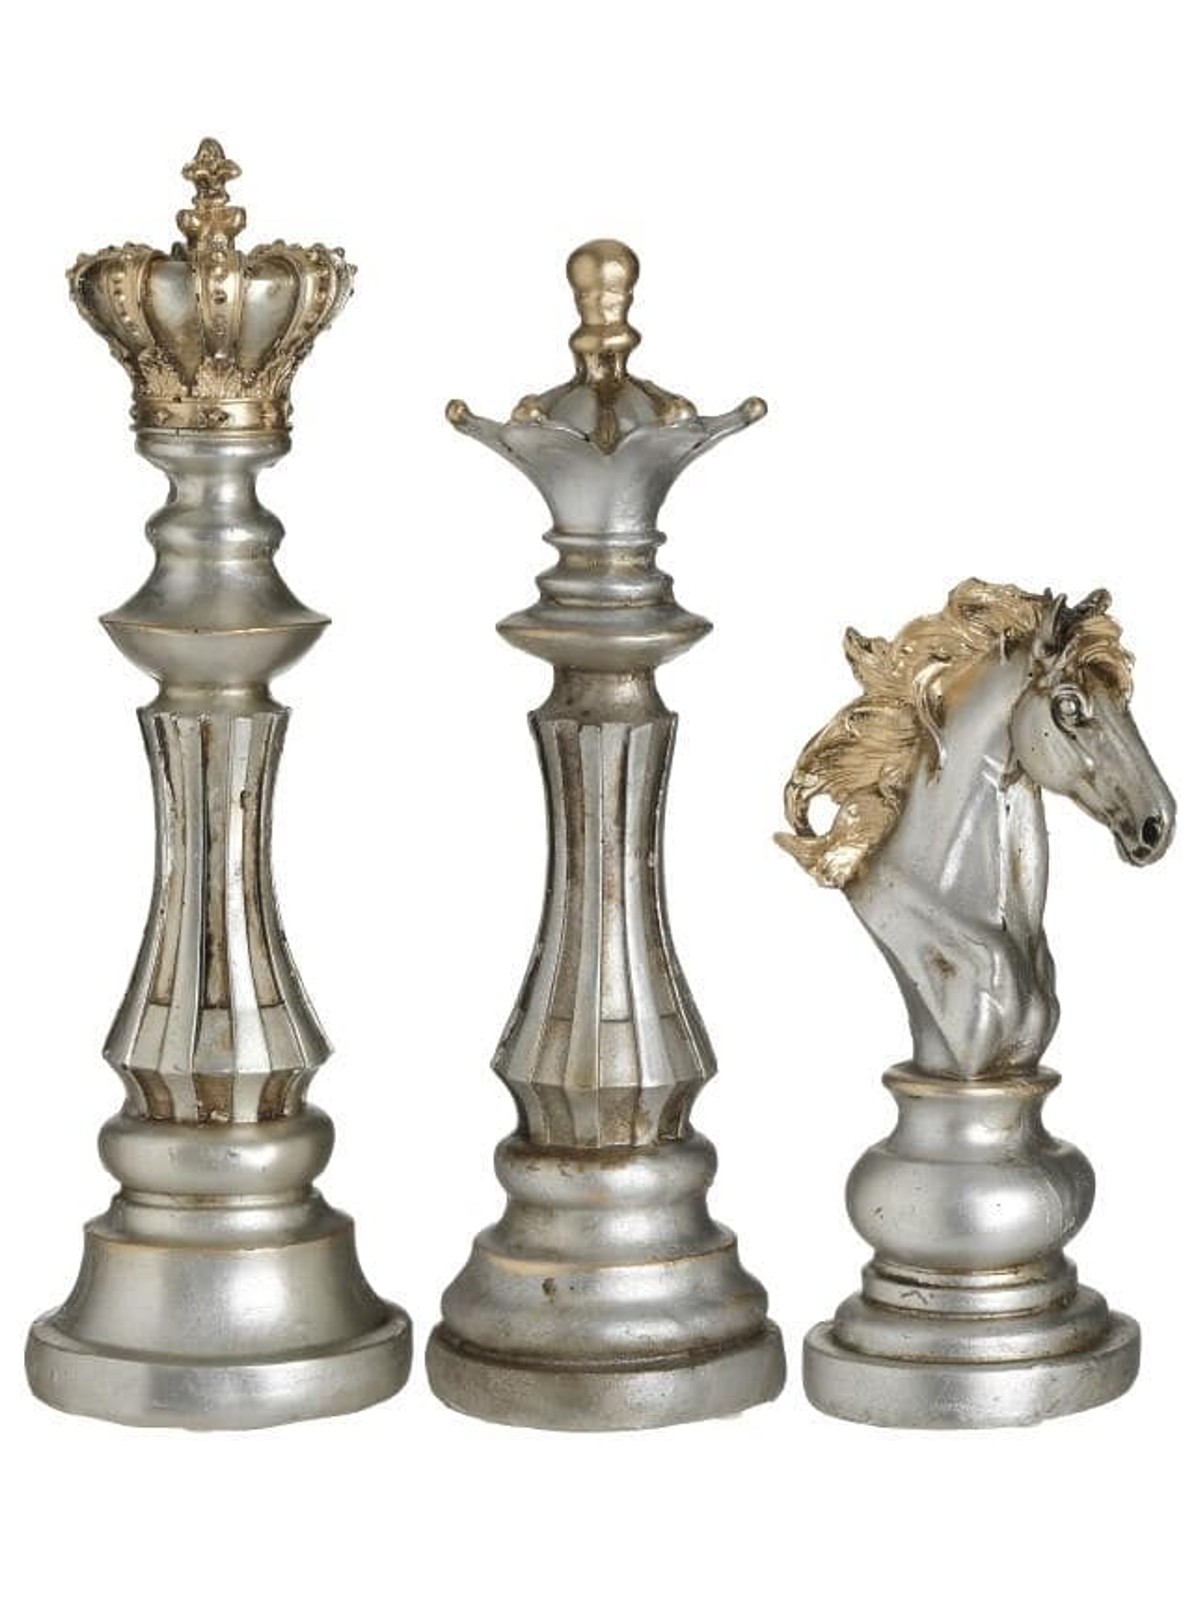 “King” chess piece